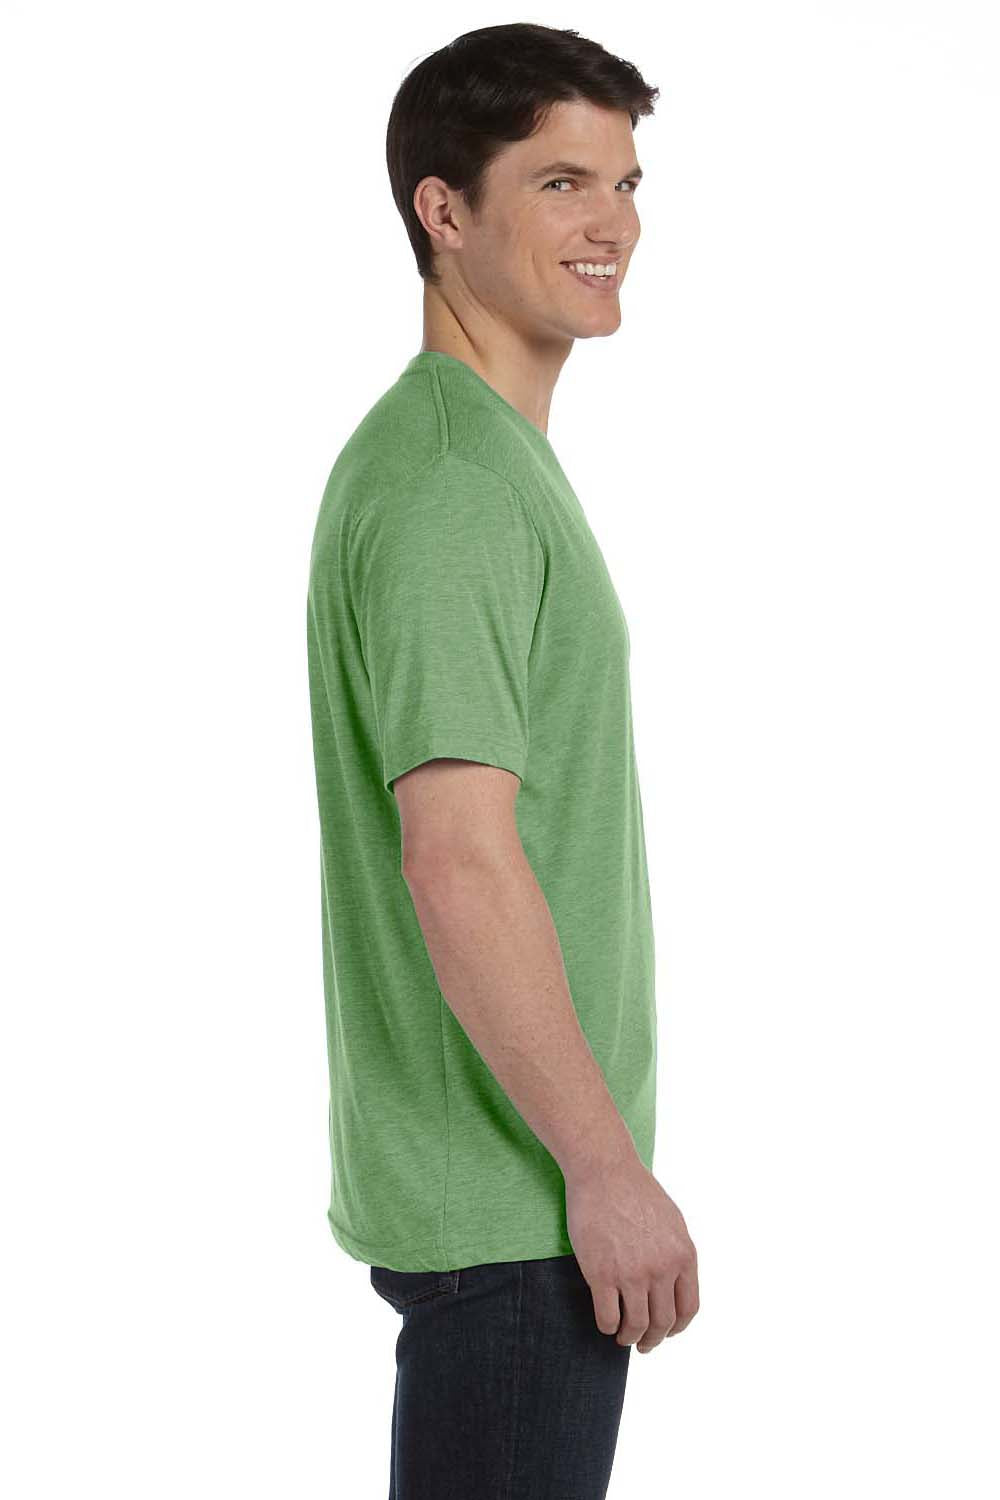 Bella + Canvas 3415C Mens Short Sleeve V-Neck T-Shirt Green Side